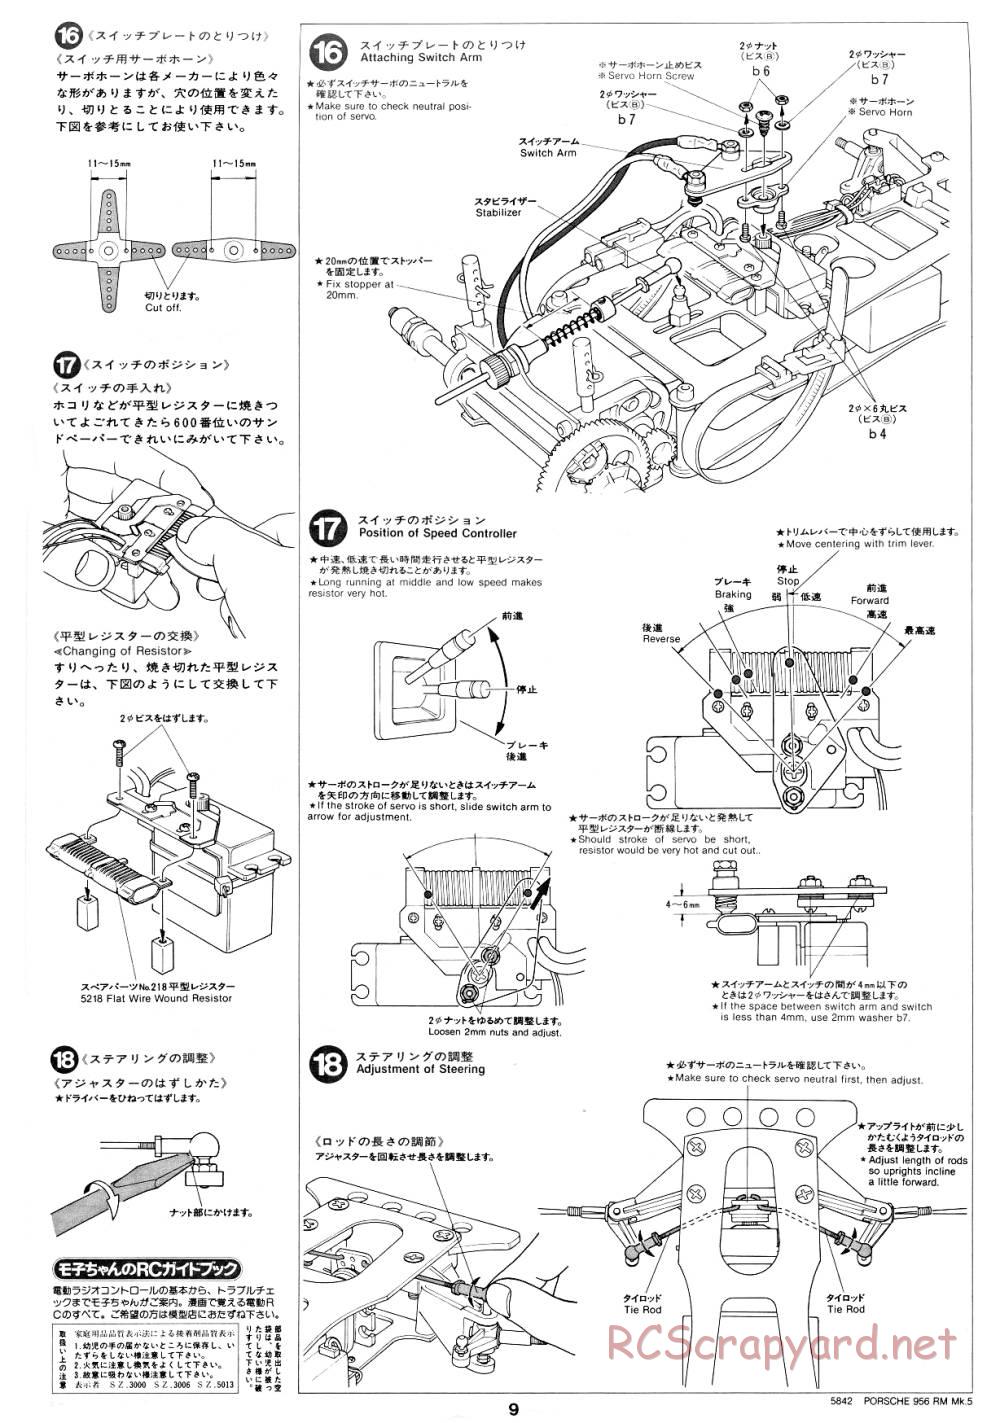 Tamiya - Porsche 956 - RM MK.5 - 58042 - Manual - Page 9